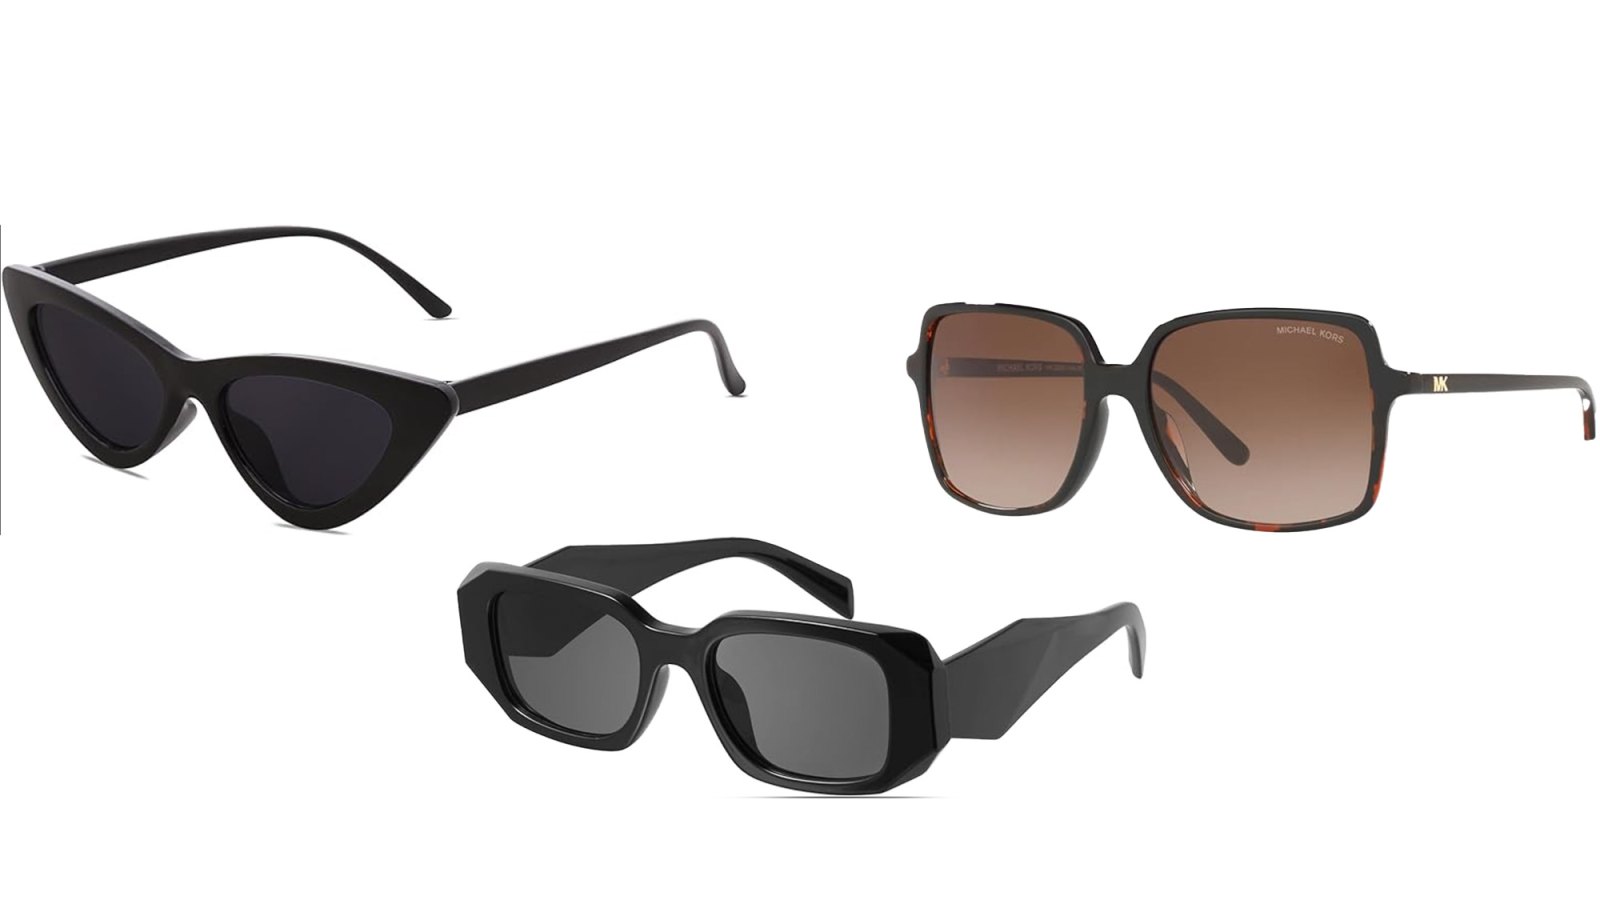 Amazon sunglasses deal